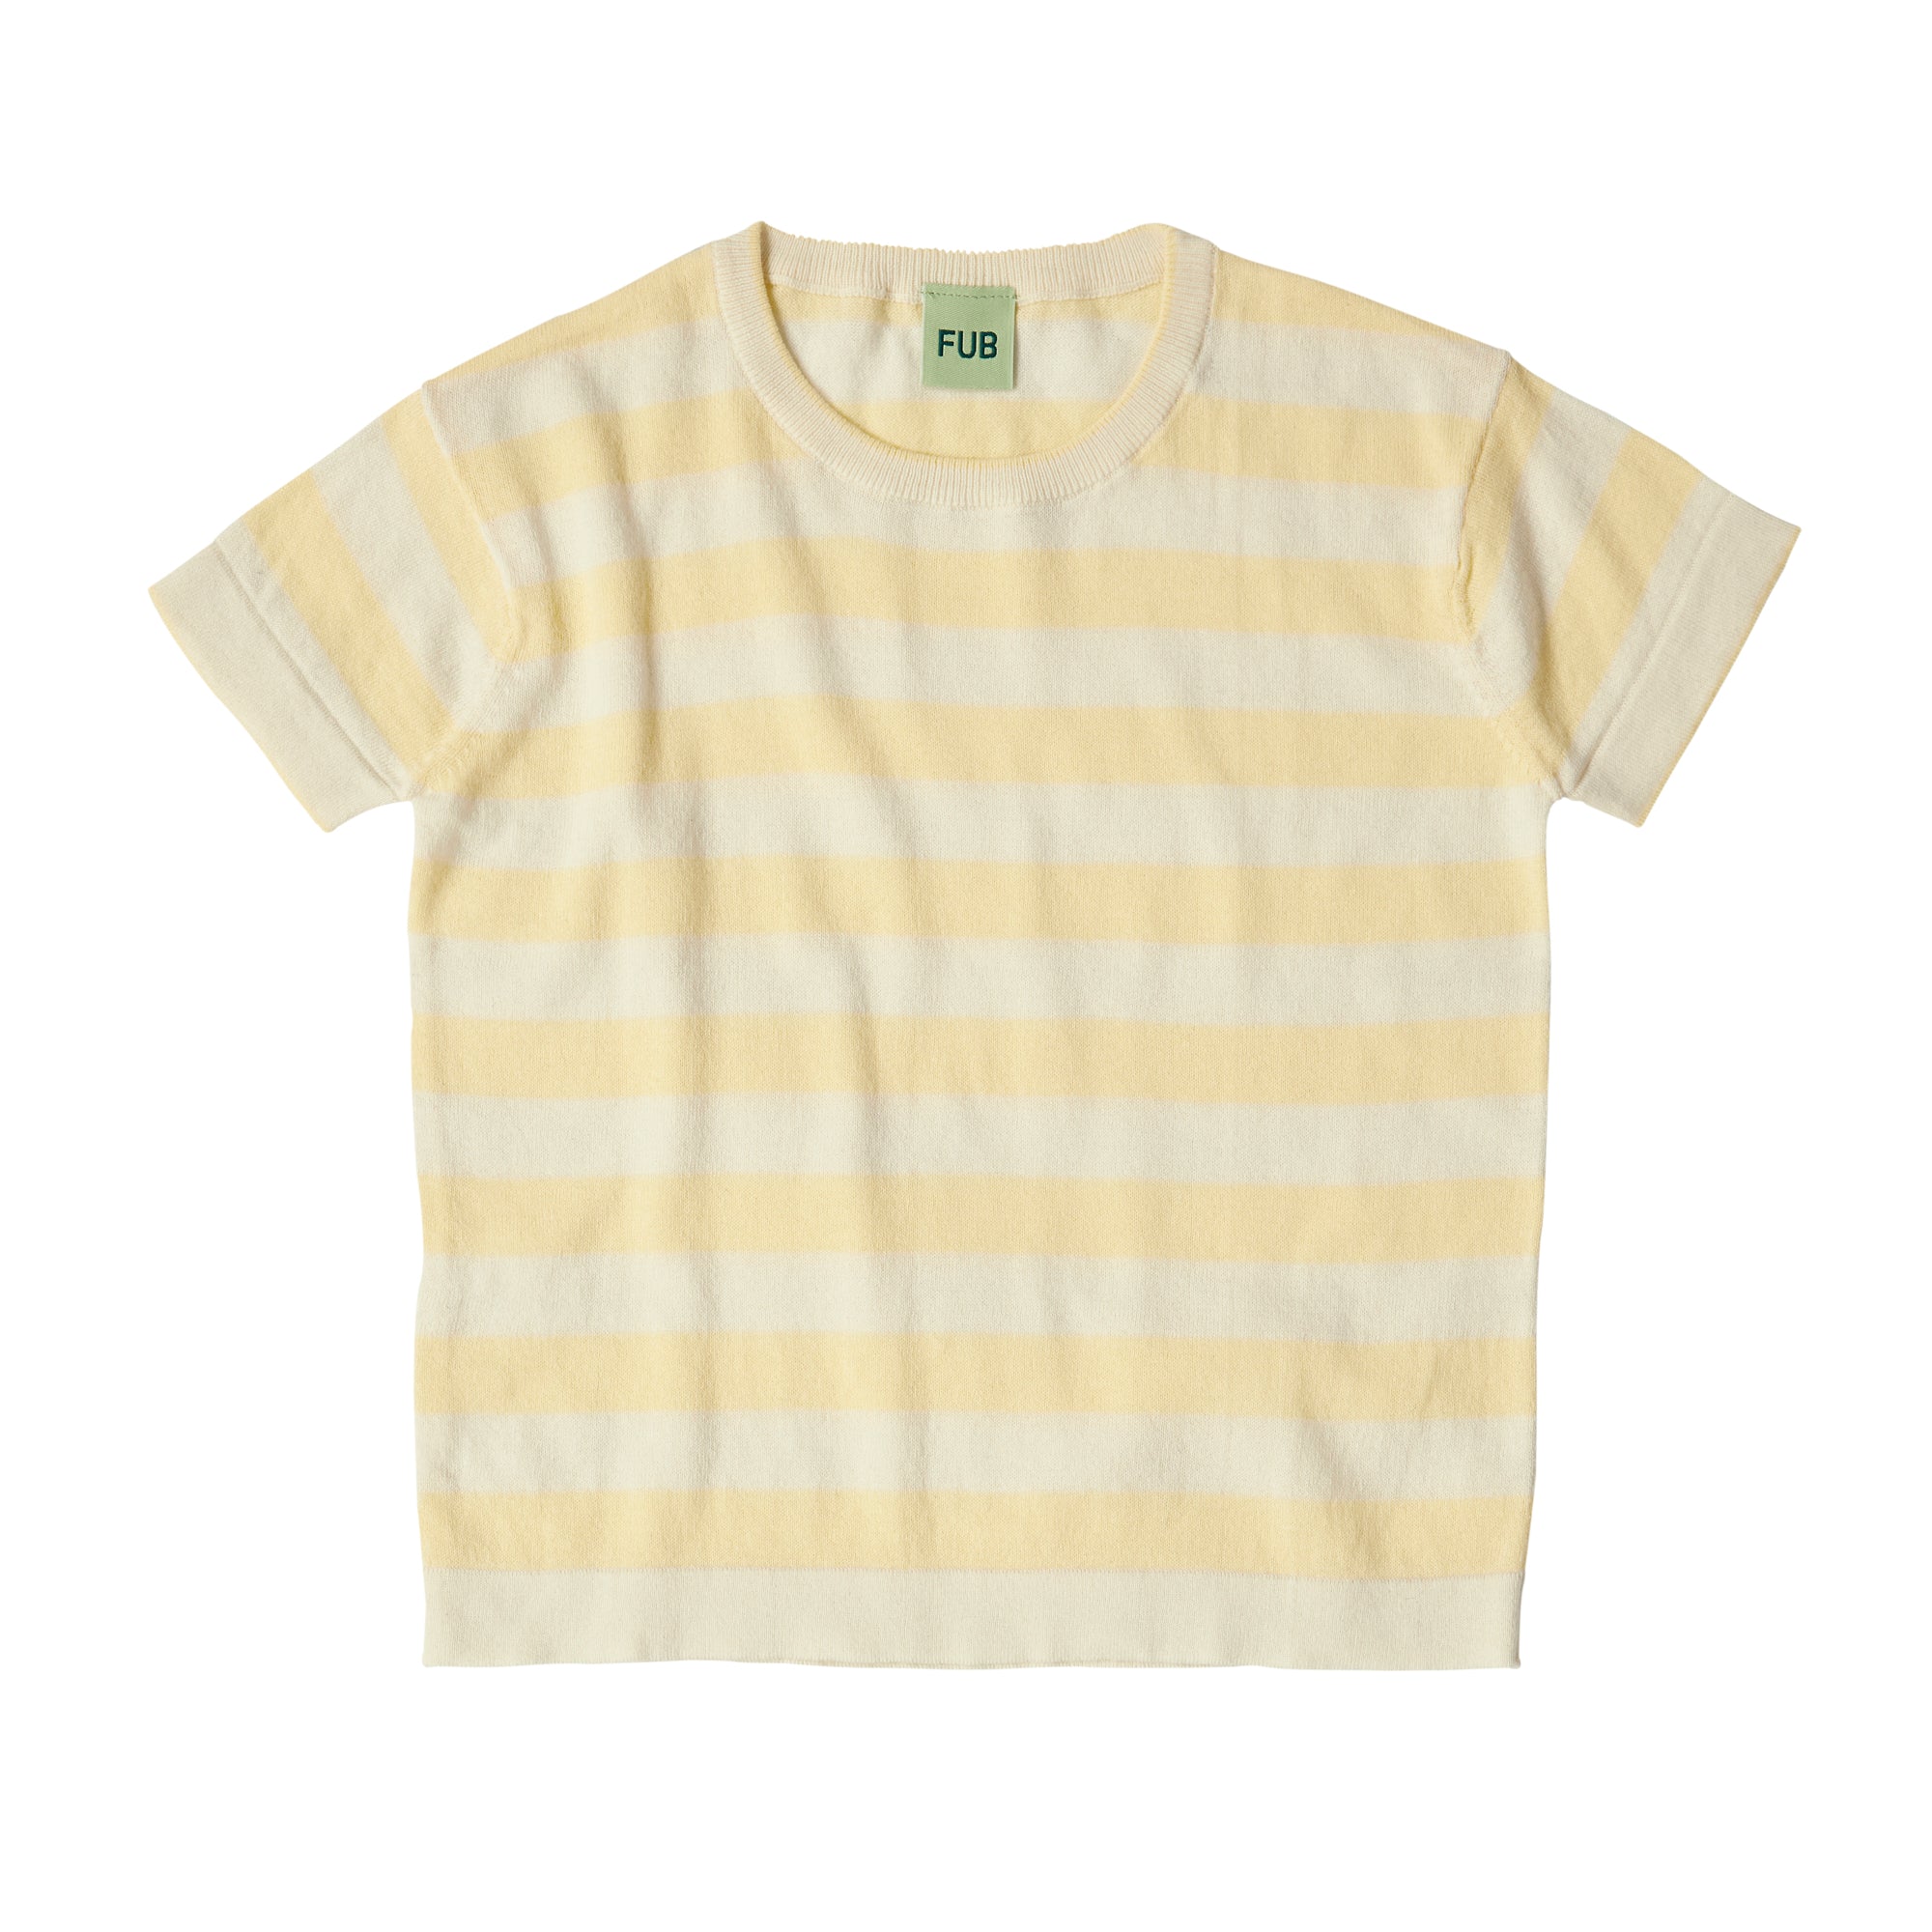 Fub - t-shirt - ecru/corn